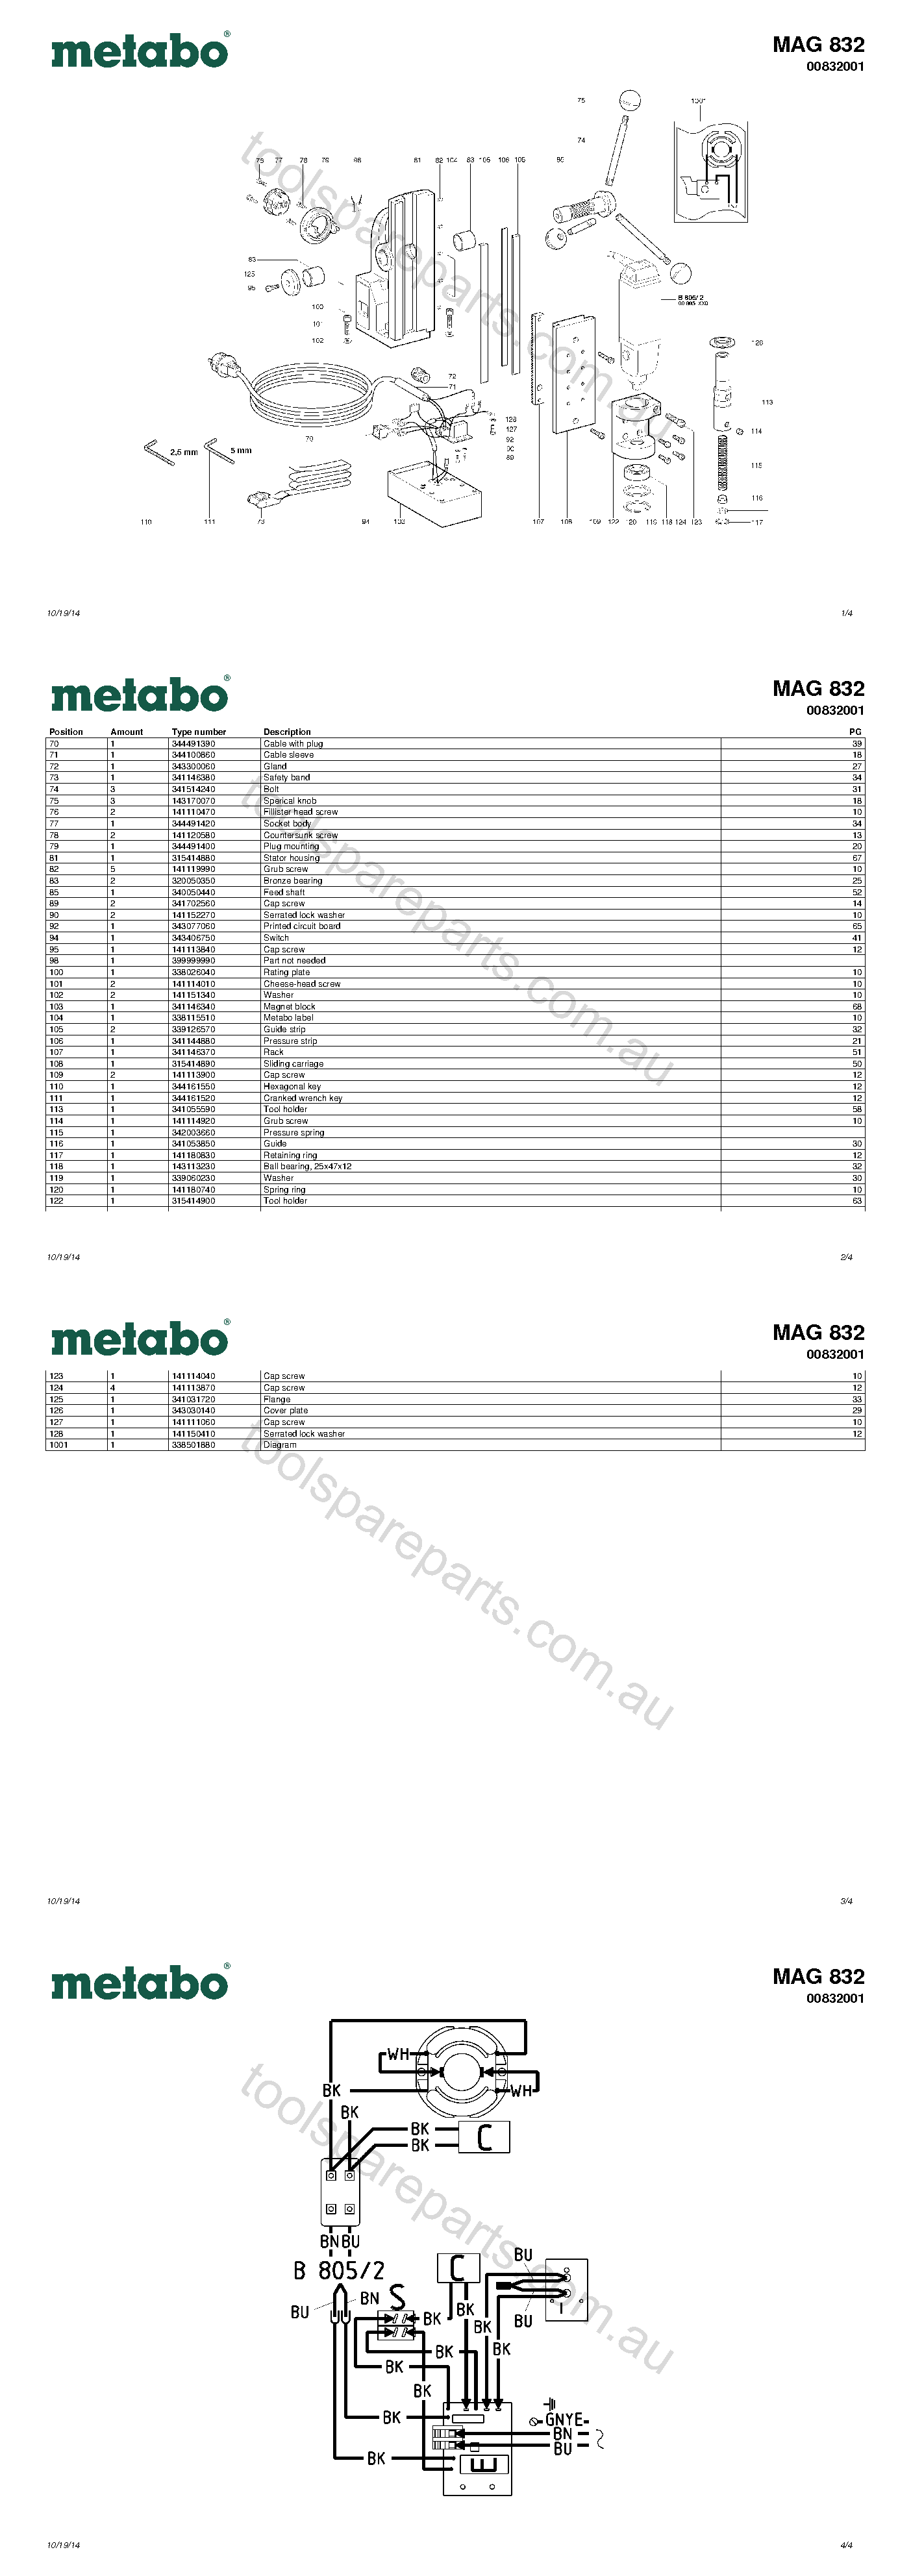 Metabo MAG 832 00832001  Diagram 1